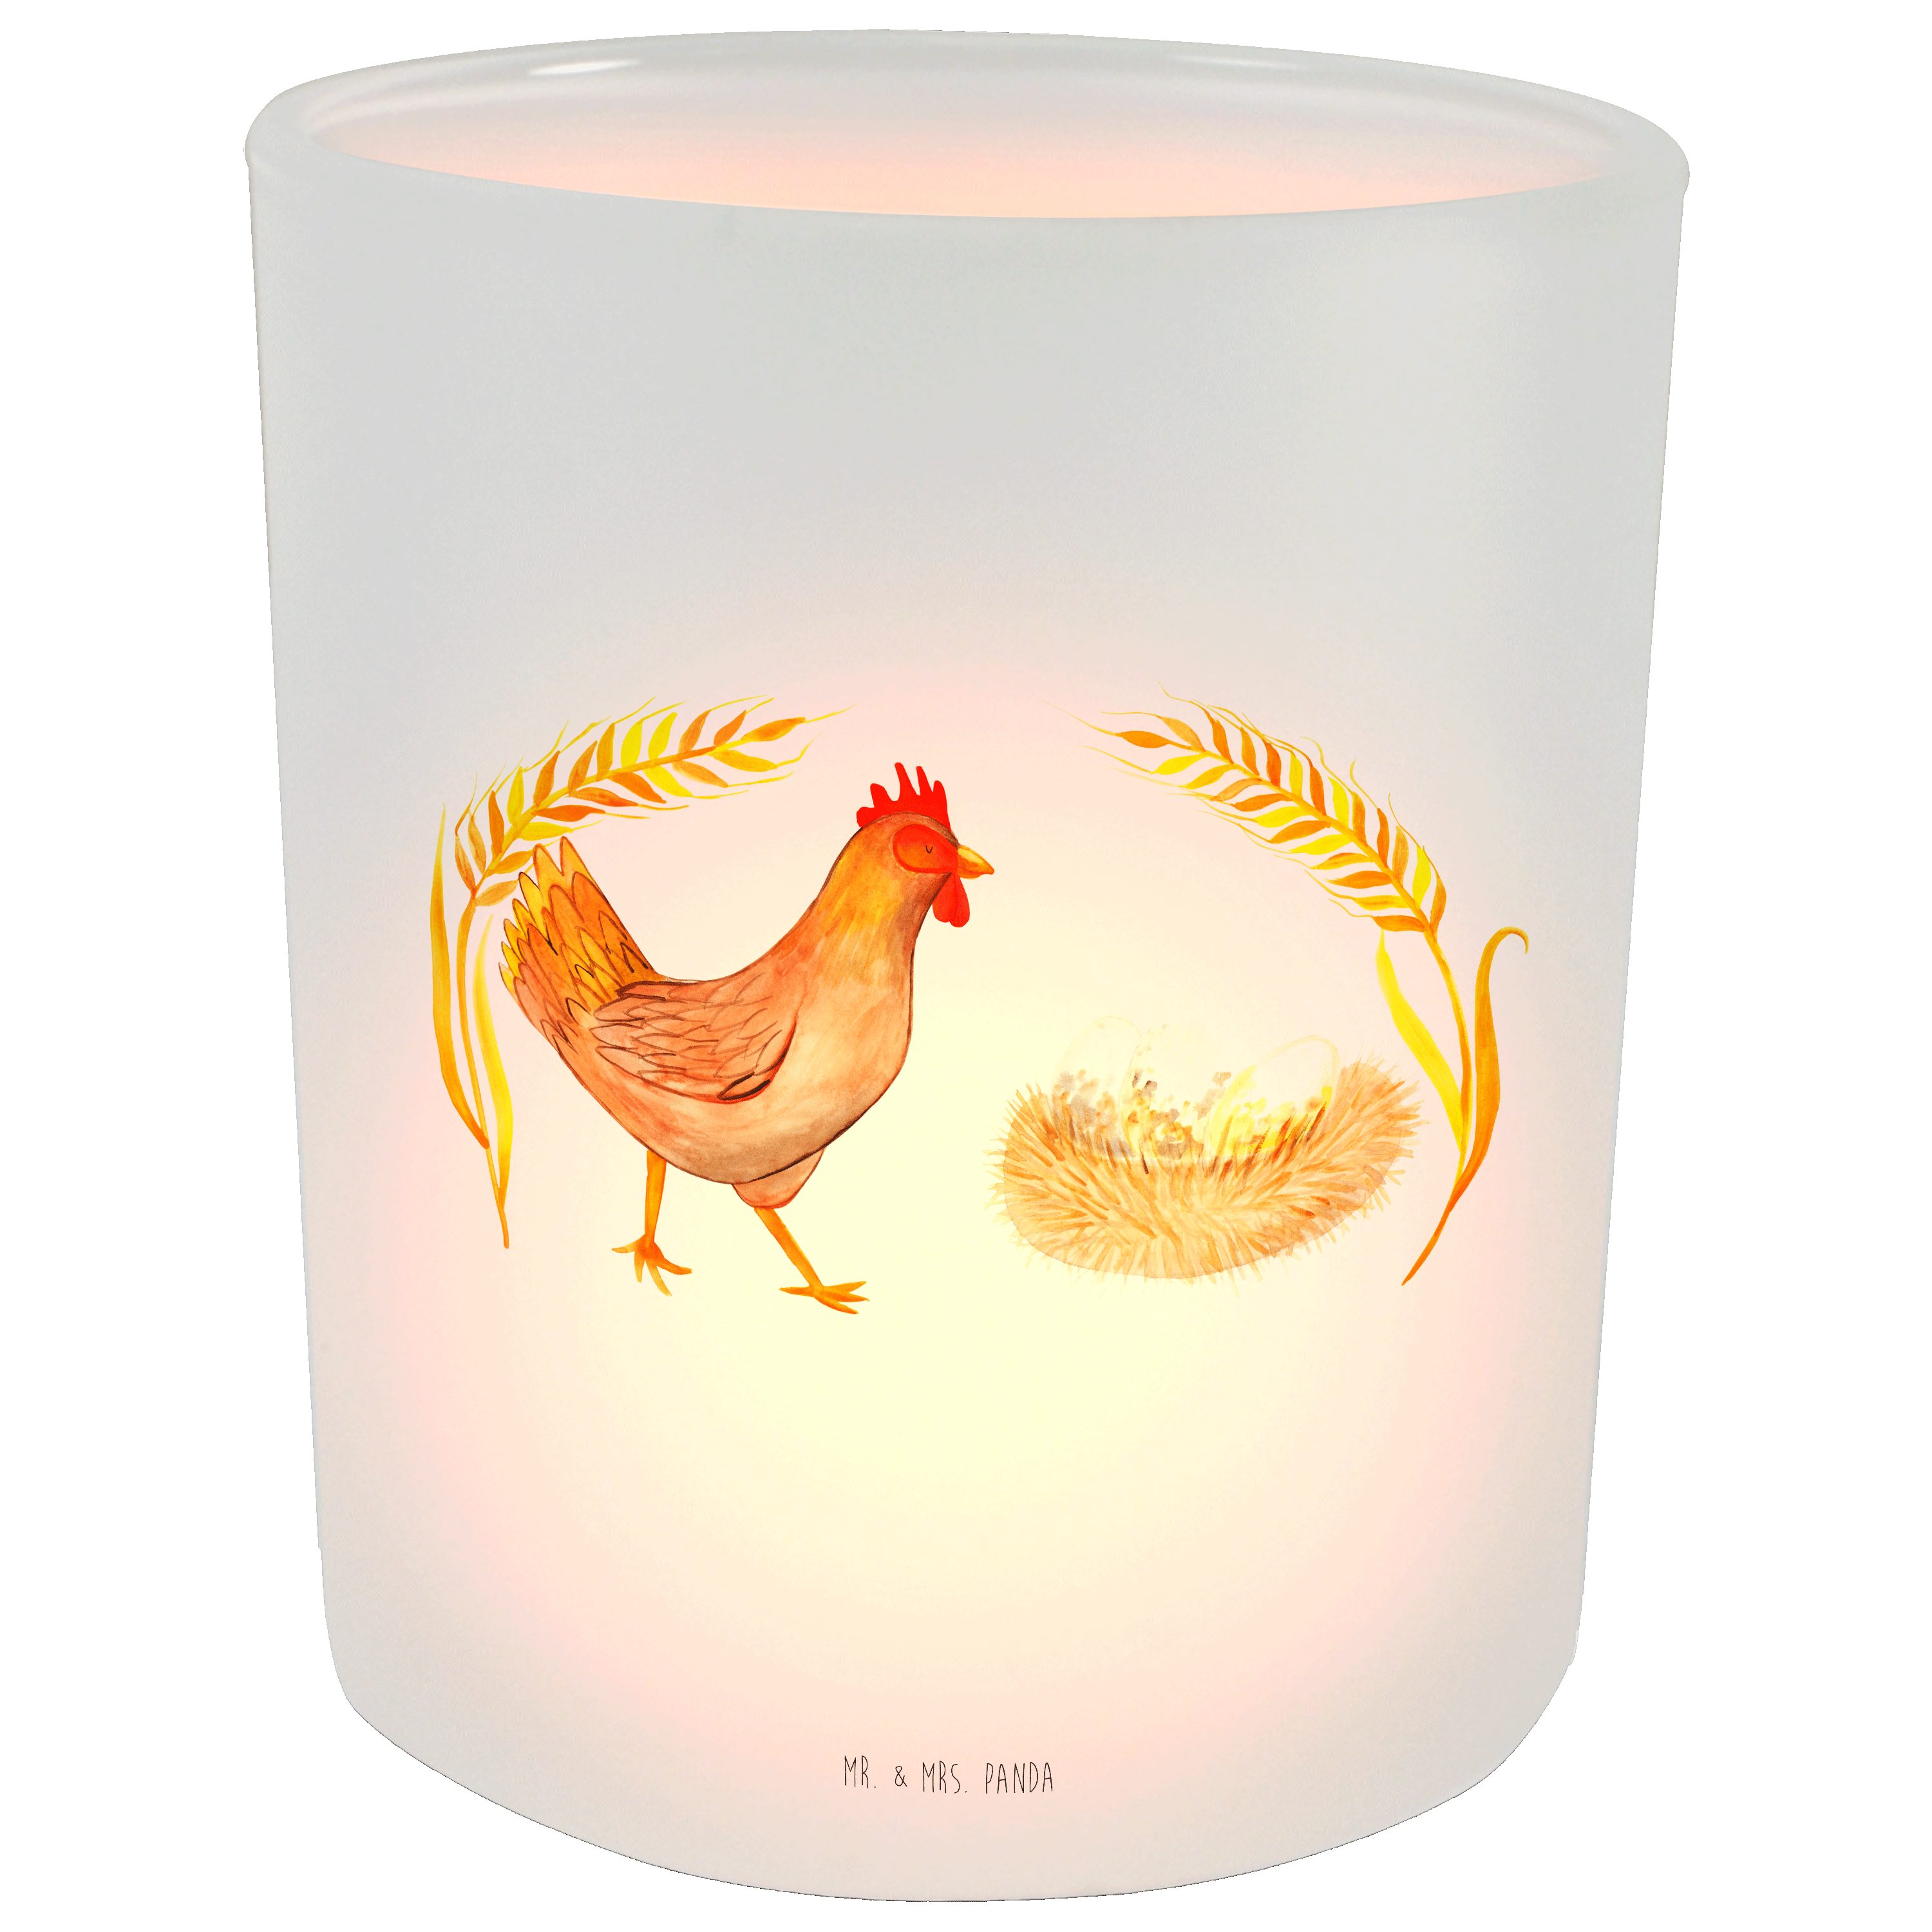 Mr. & Mrs. Panda Windlicht stolz St) - Geschenk, Landwirtin, - (1 Transparent Kerzenlicht, Magie, Huhn